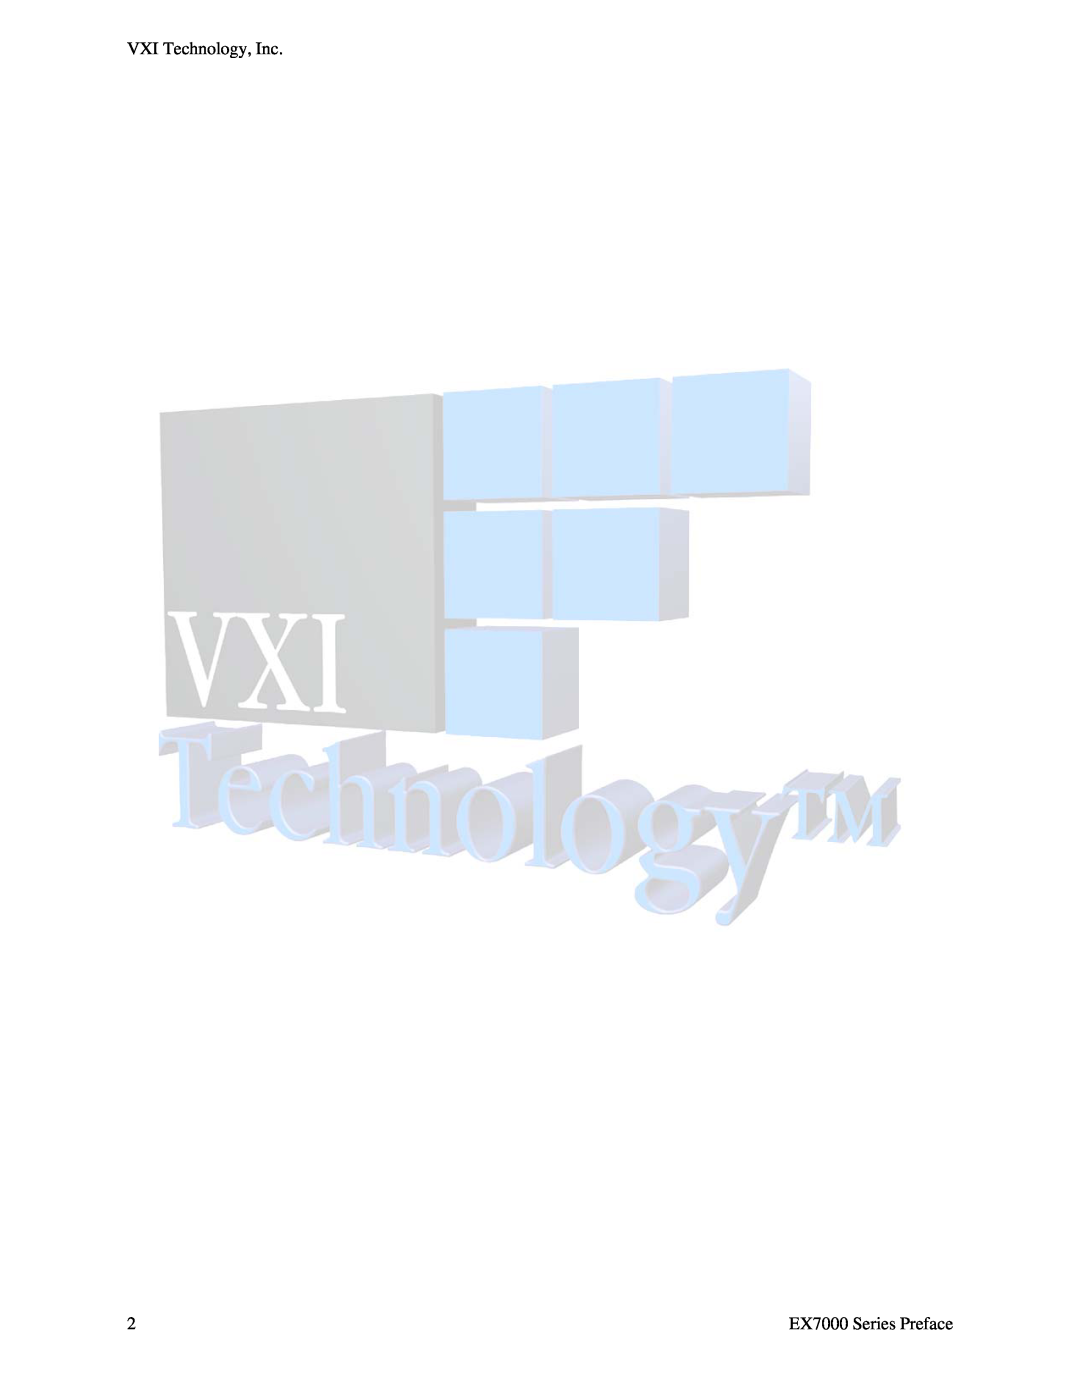 VXI user manual VXI Technology, Inc, EX7000 Series Preface 